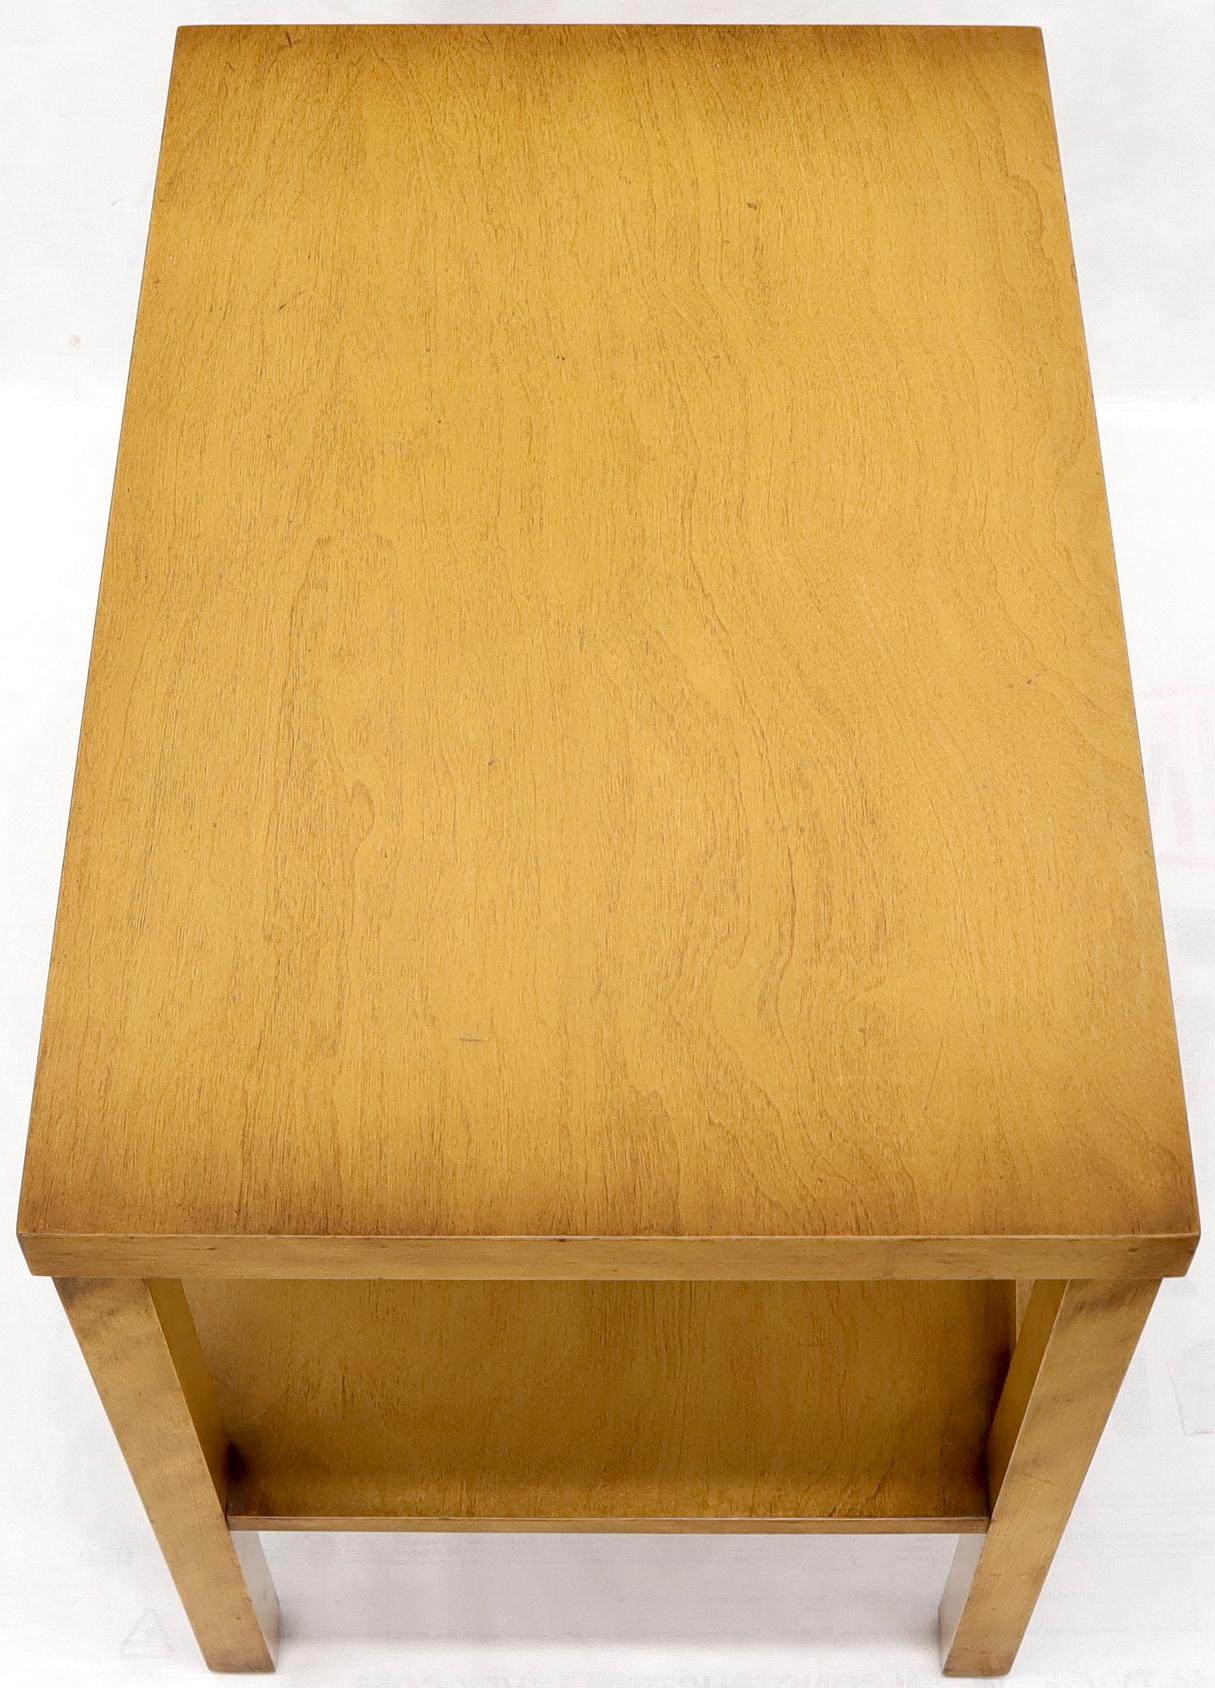 Hardwood Decorative Modern Design Faux Finish One Shelf Side End Table For Sale